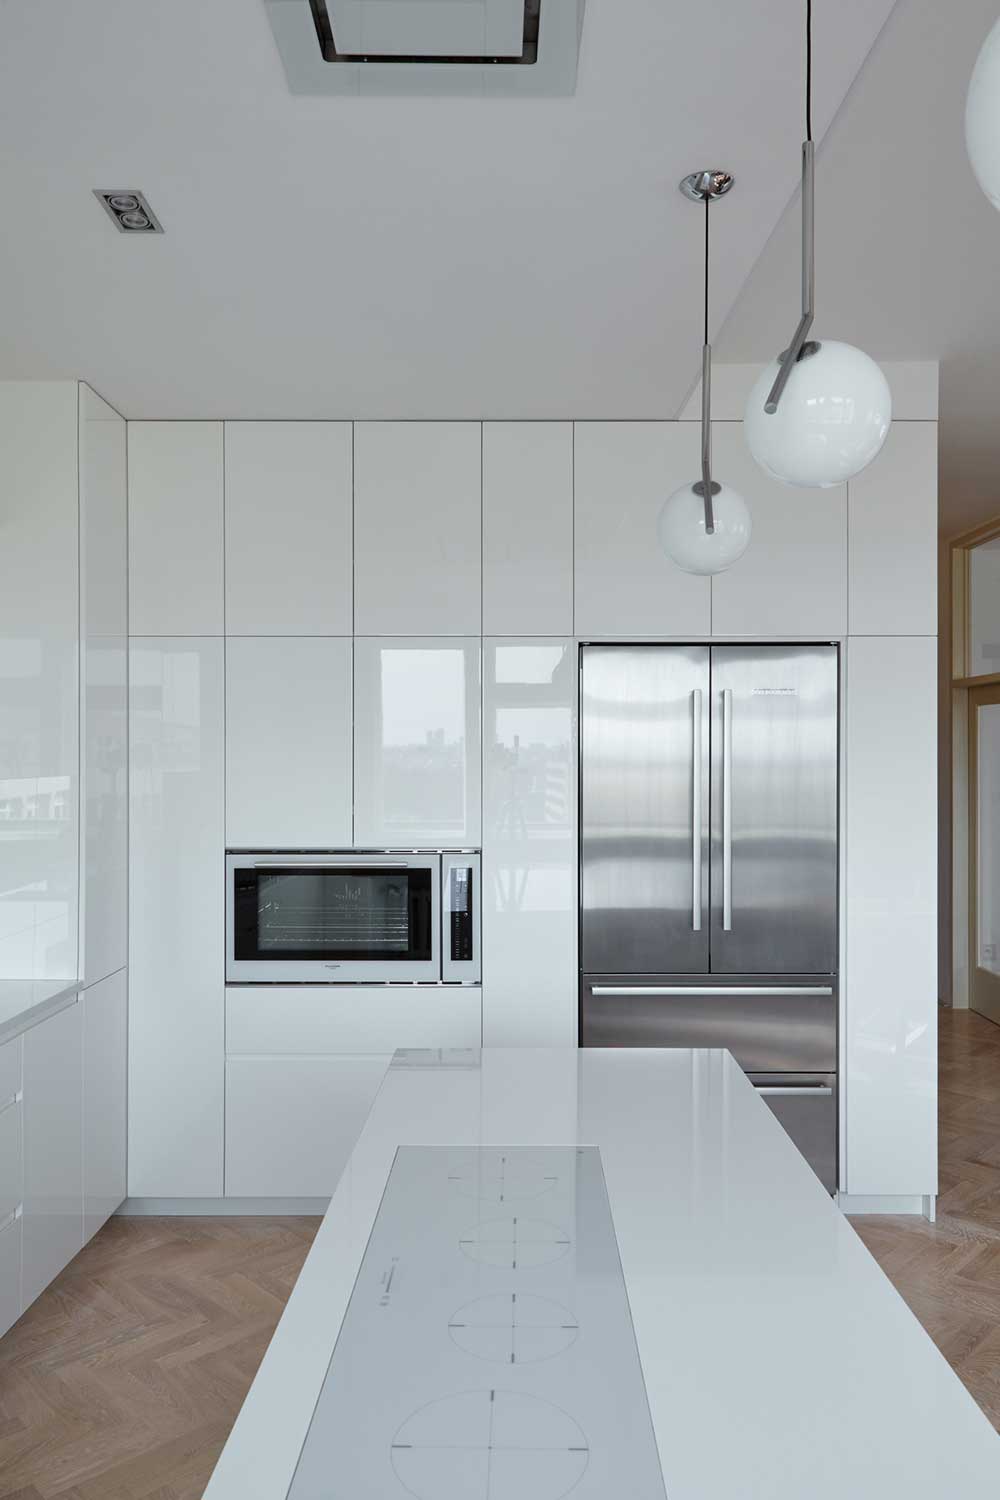 Apartment interior kitchen design